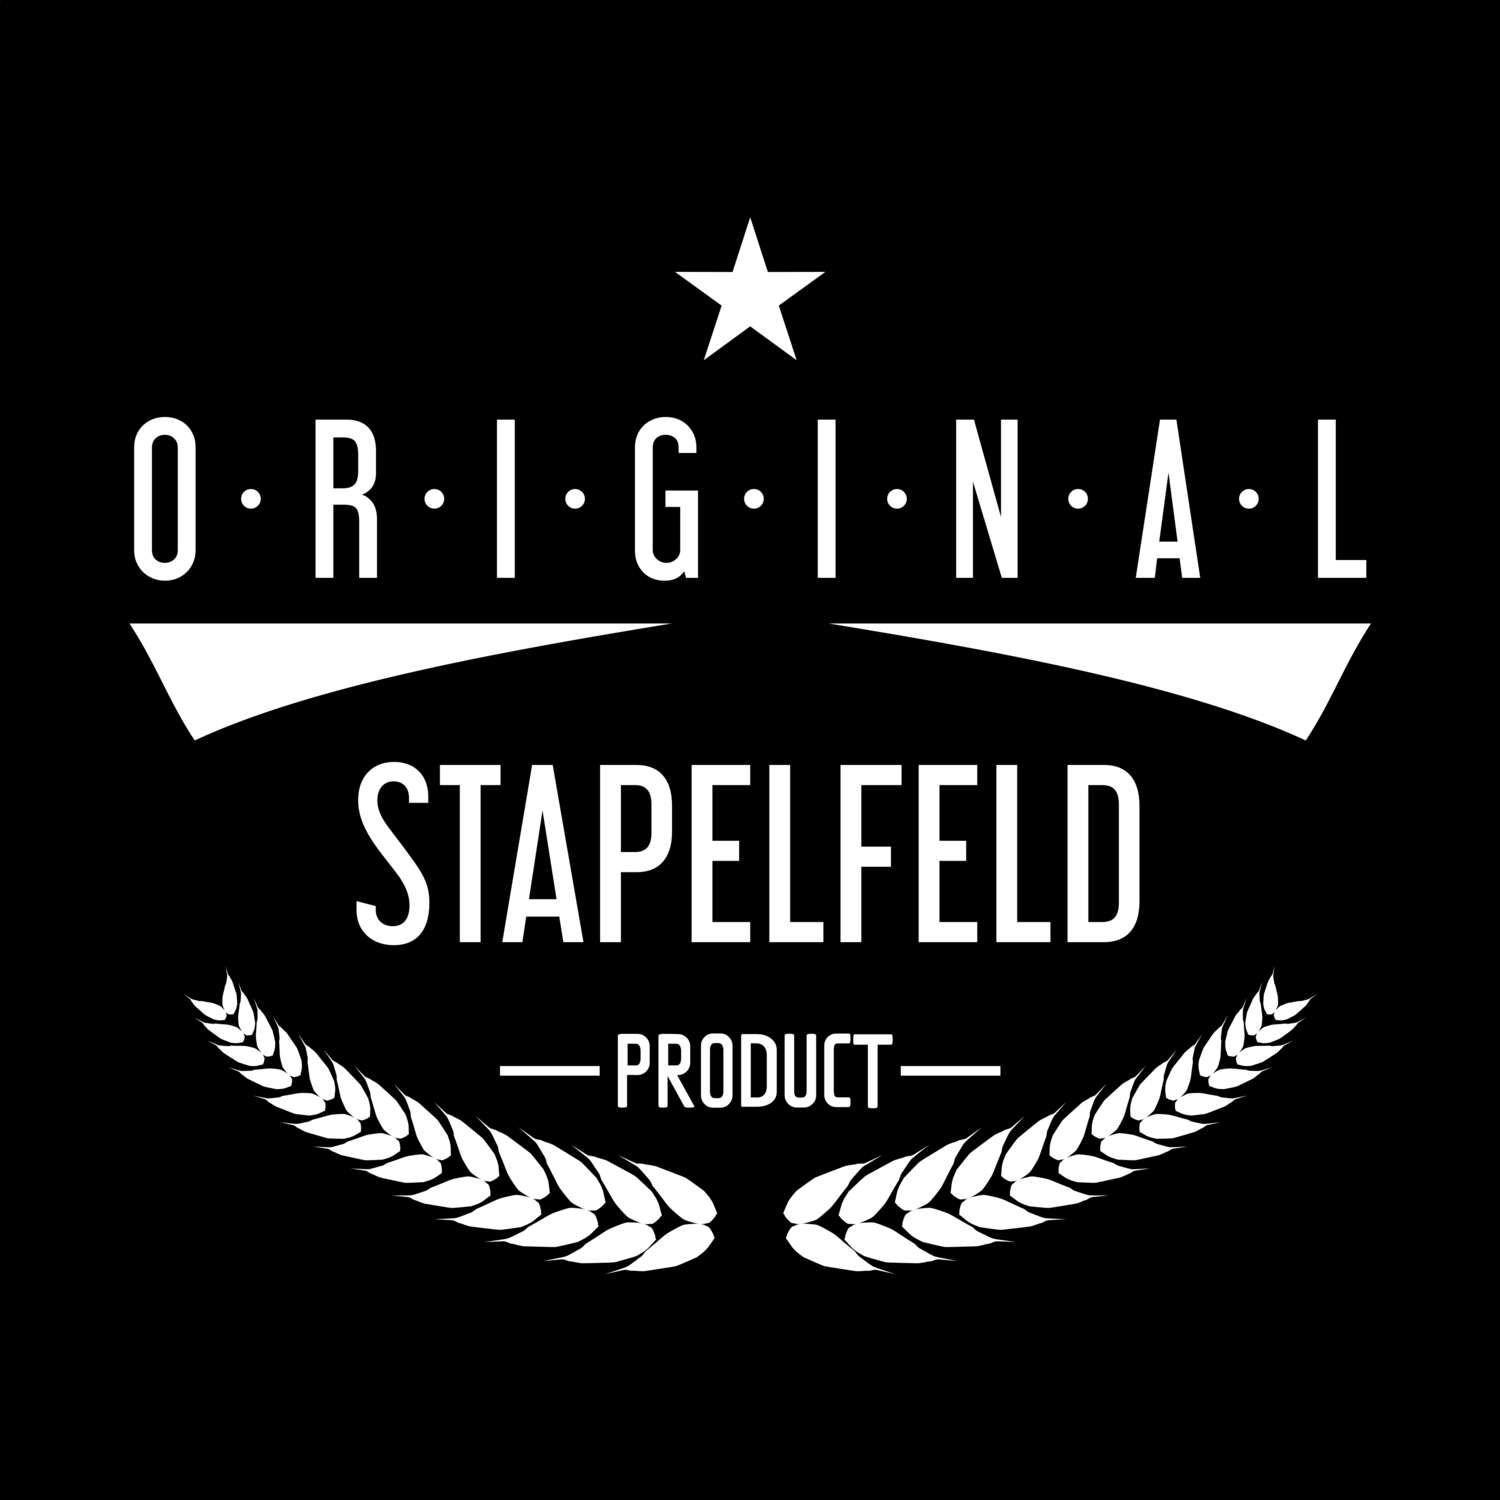 Stapelfeld T-Shirt »Original Product«